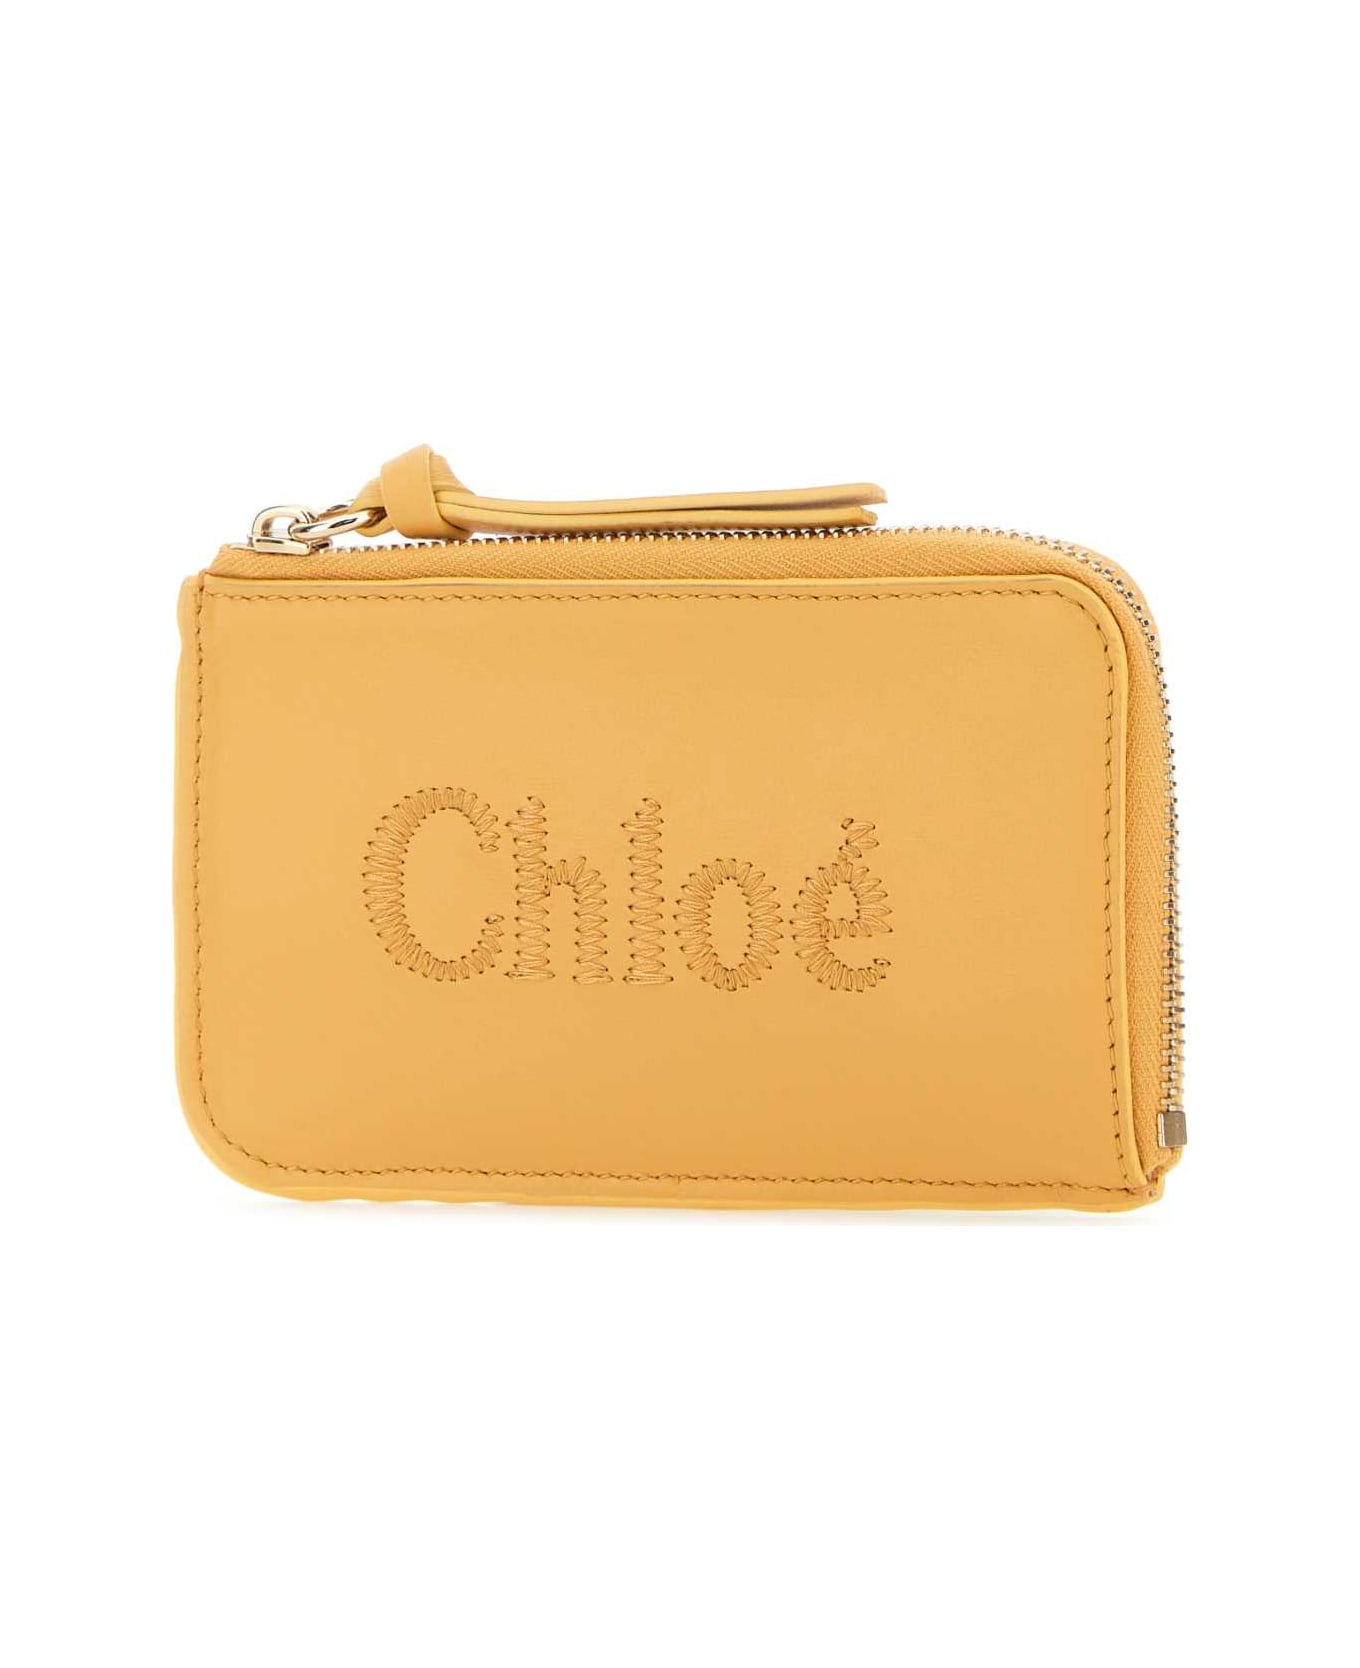 Chloé Mustard Leather Card Holder - HONEYGOLD